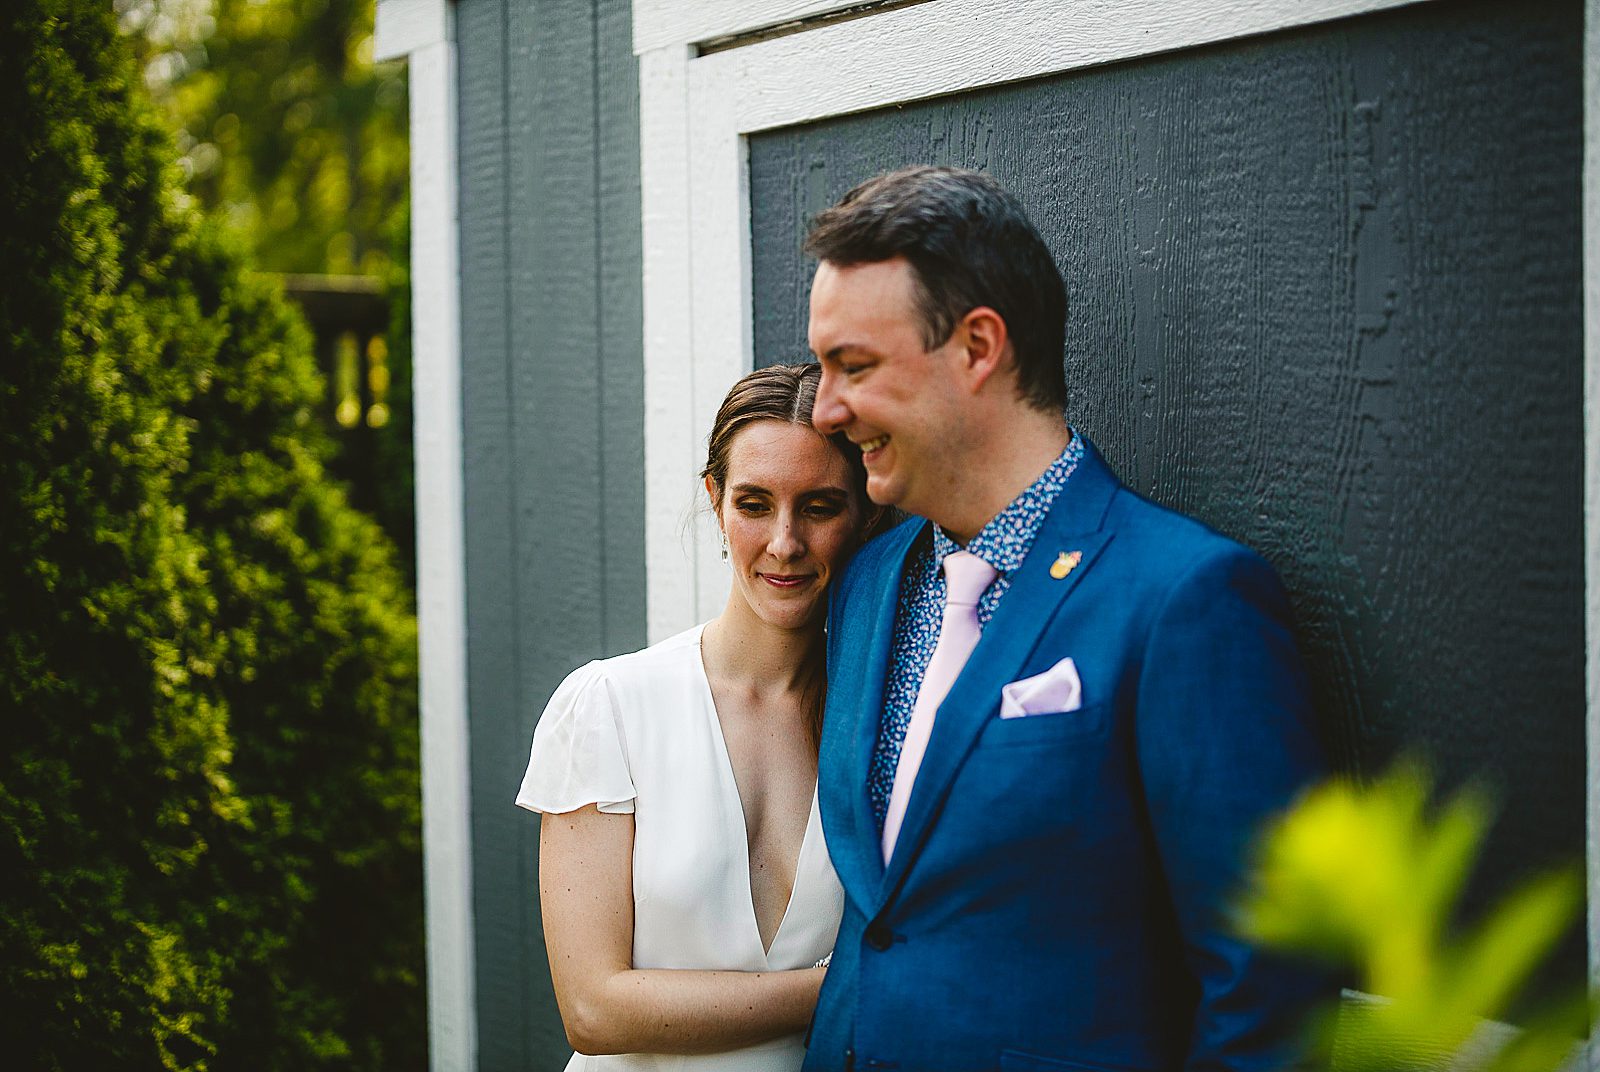 12 chicago wedding photos in back yard - Amazing Wedding in Backyard // Kristen + Jeff